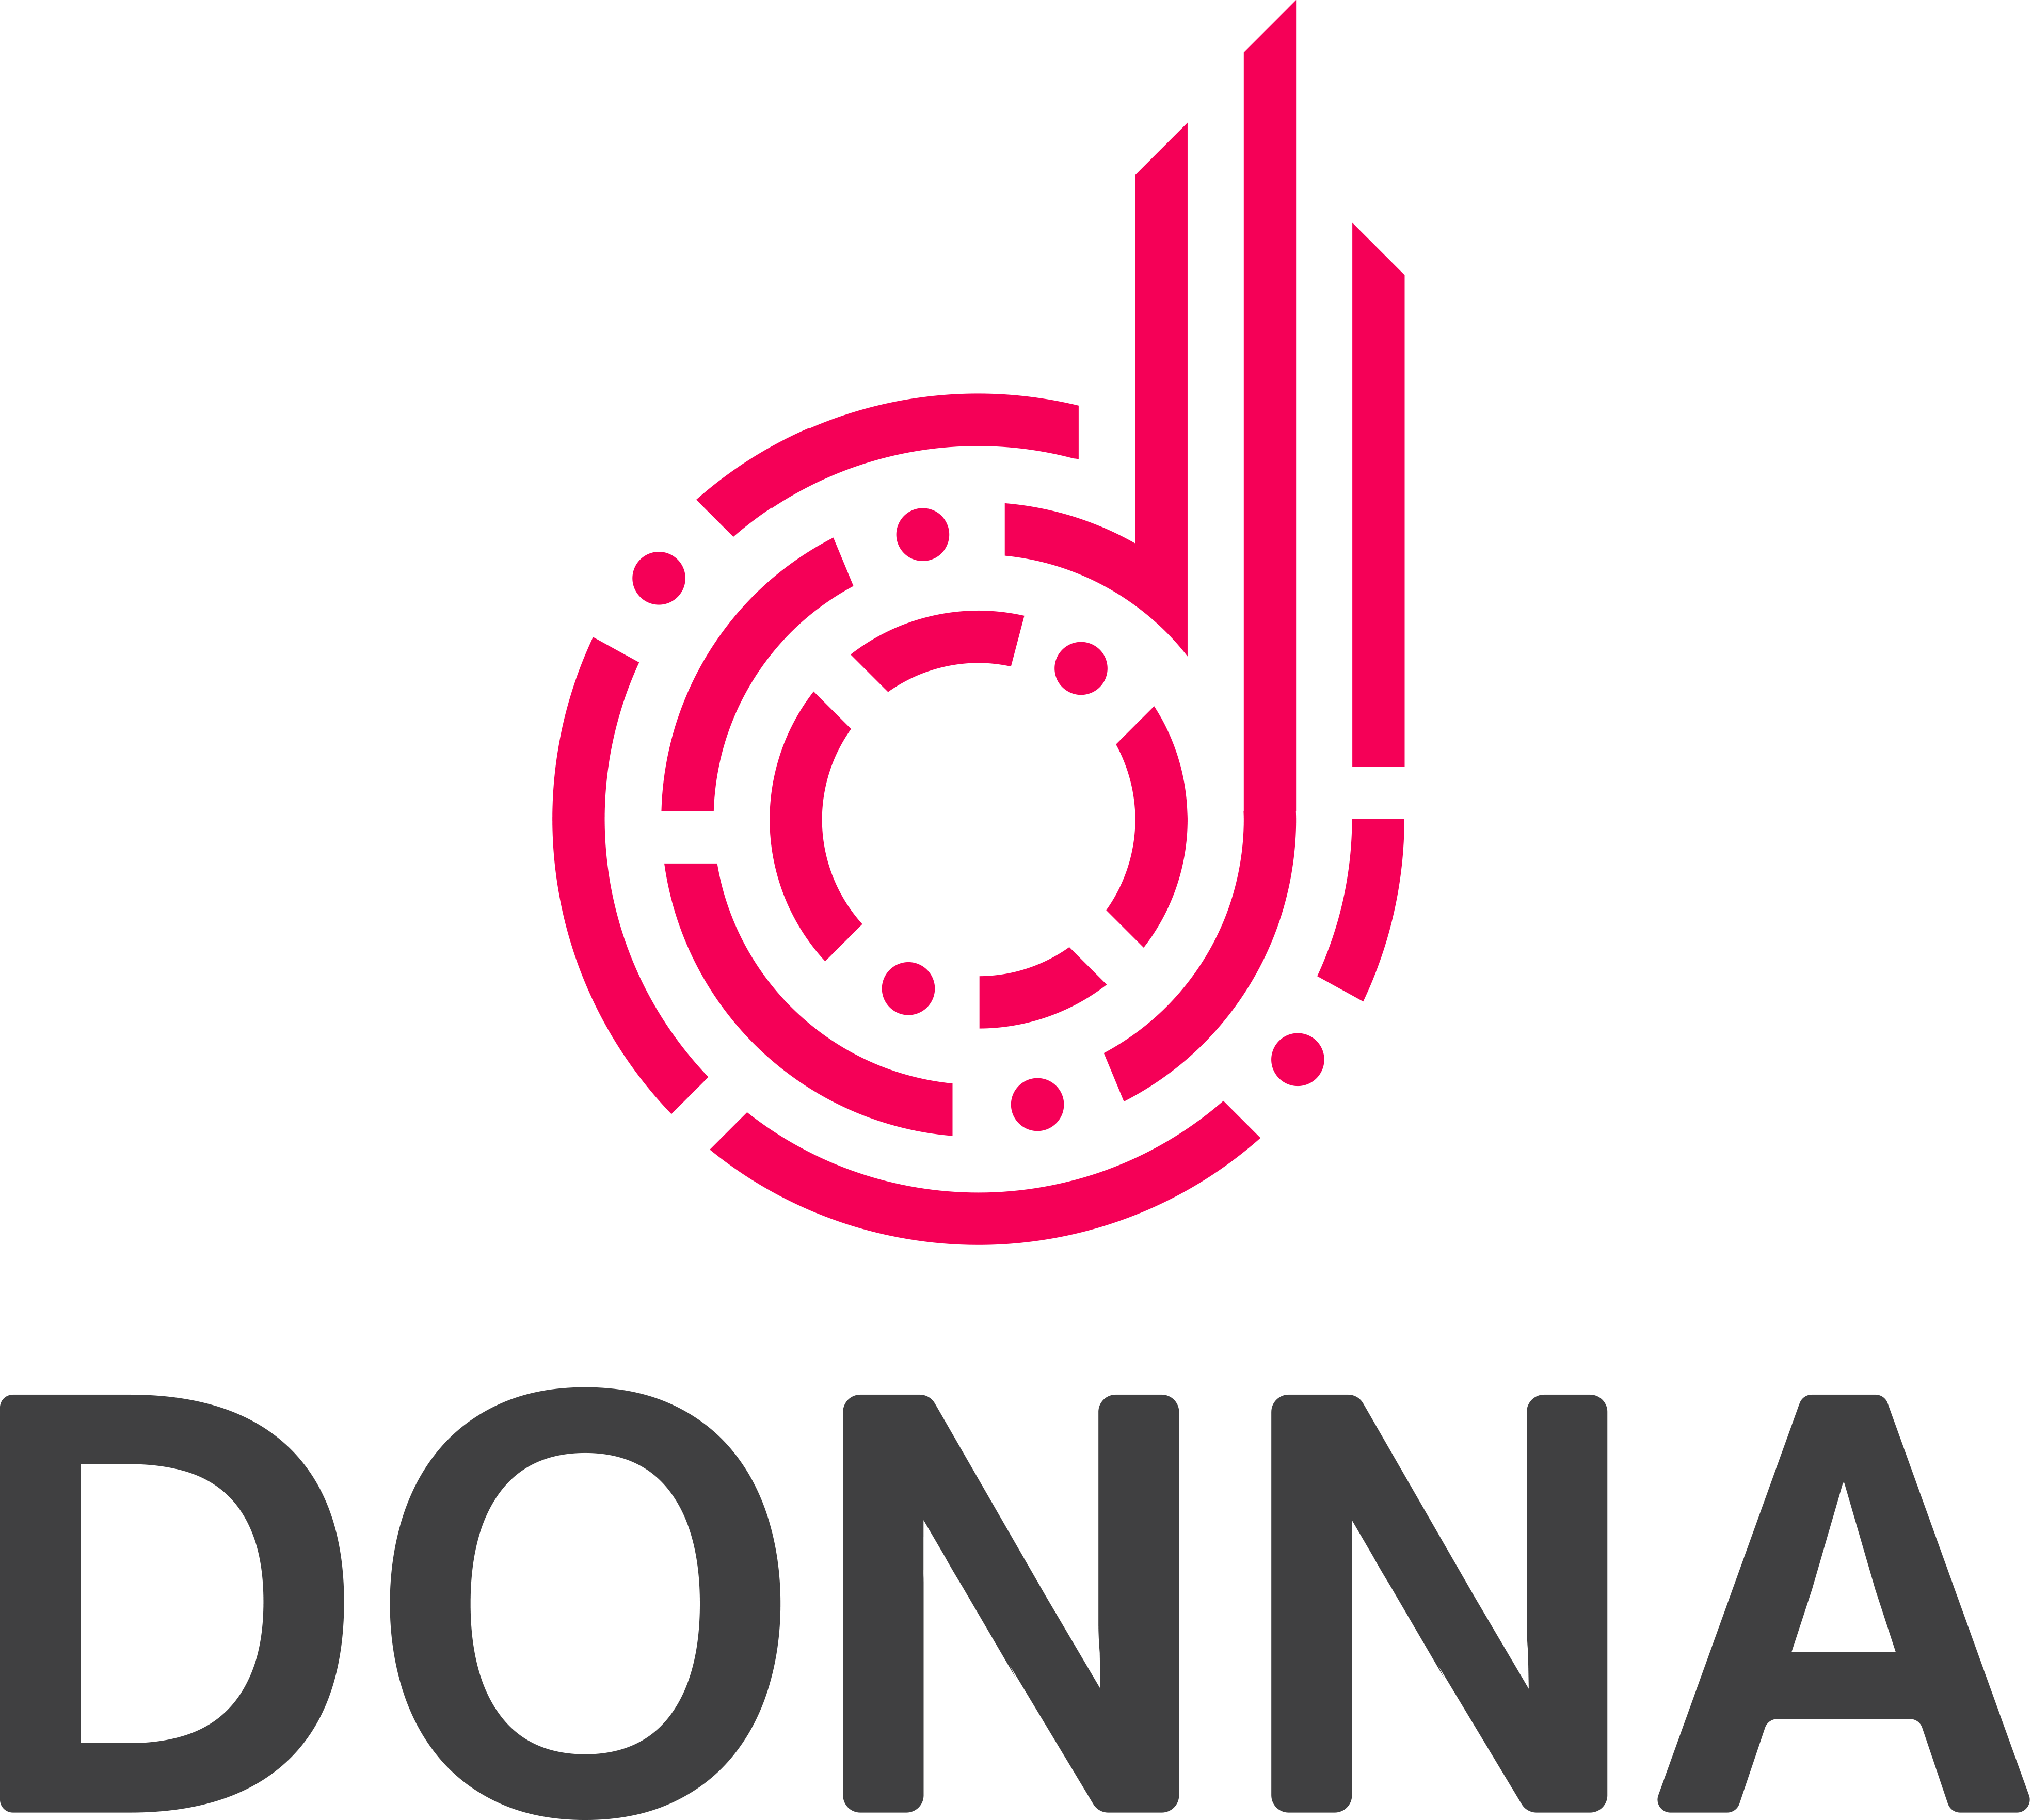 The Donna Karan Company - Crunchbase Company Profile & Funding